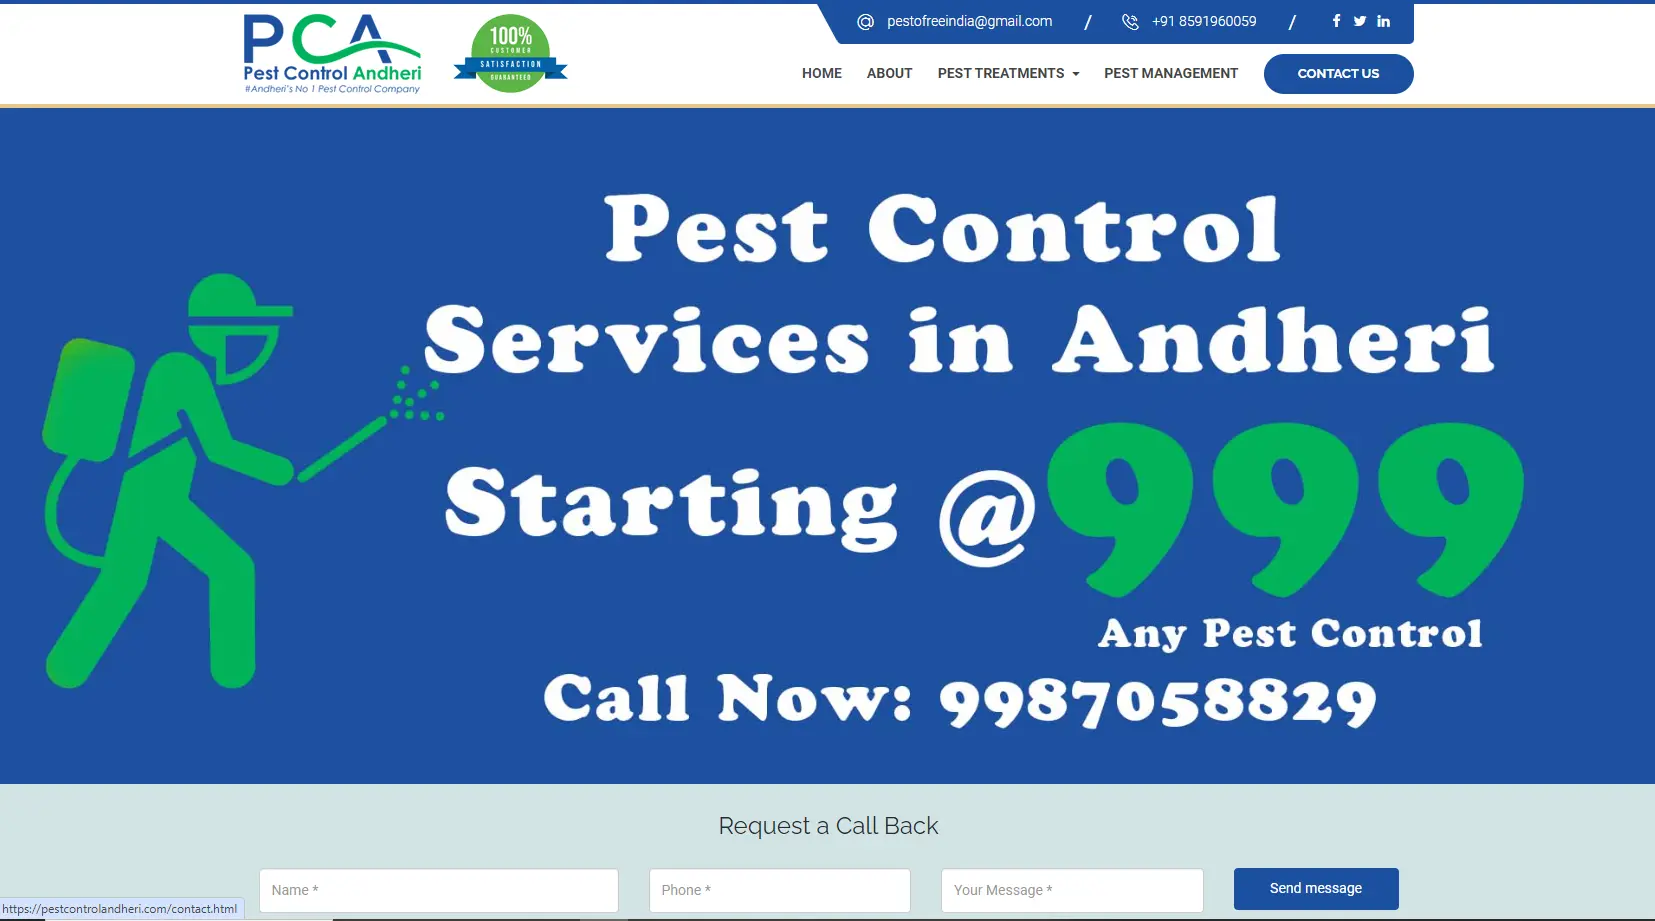 Pest Control Service in Lower Parel